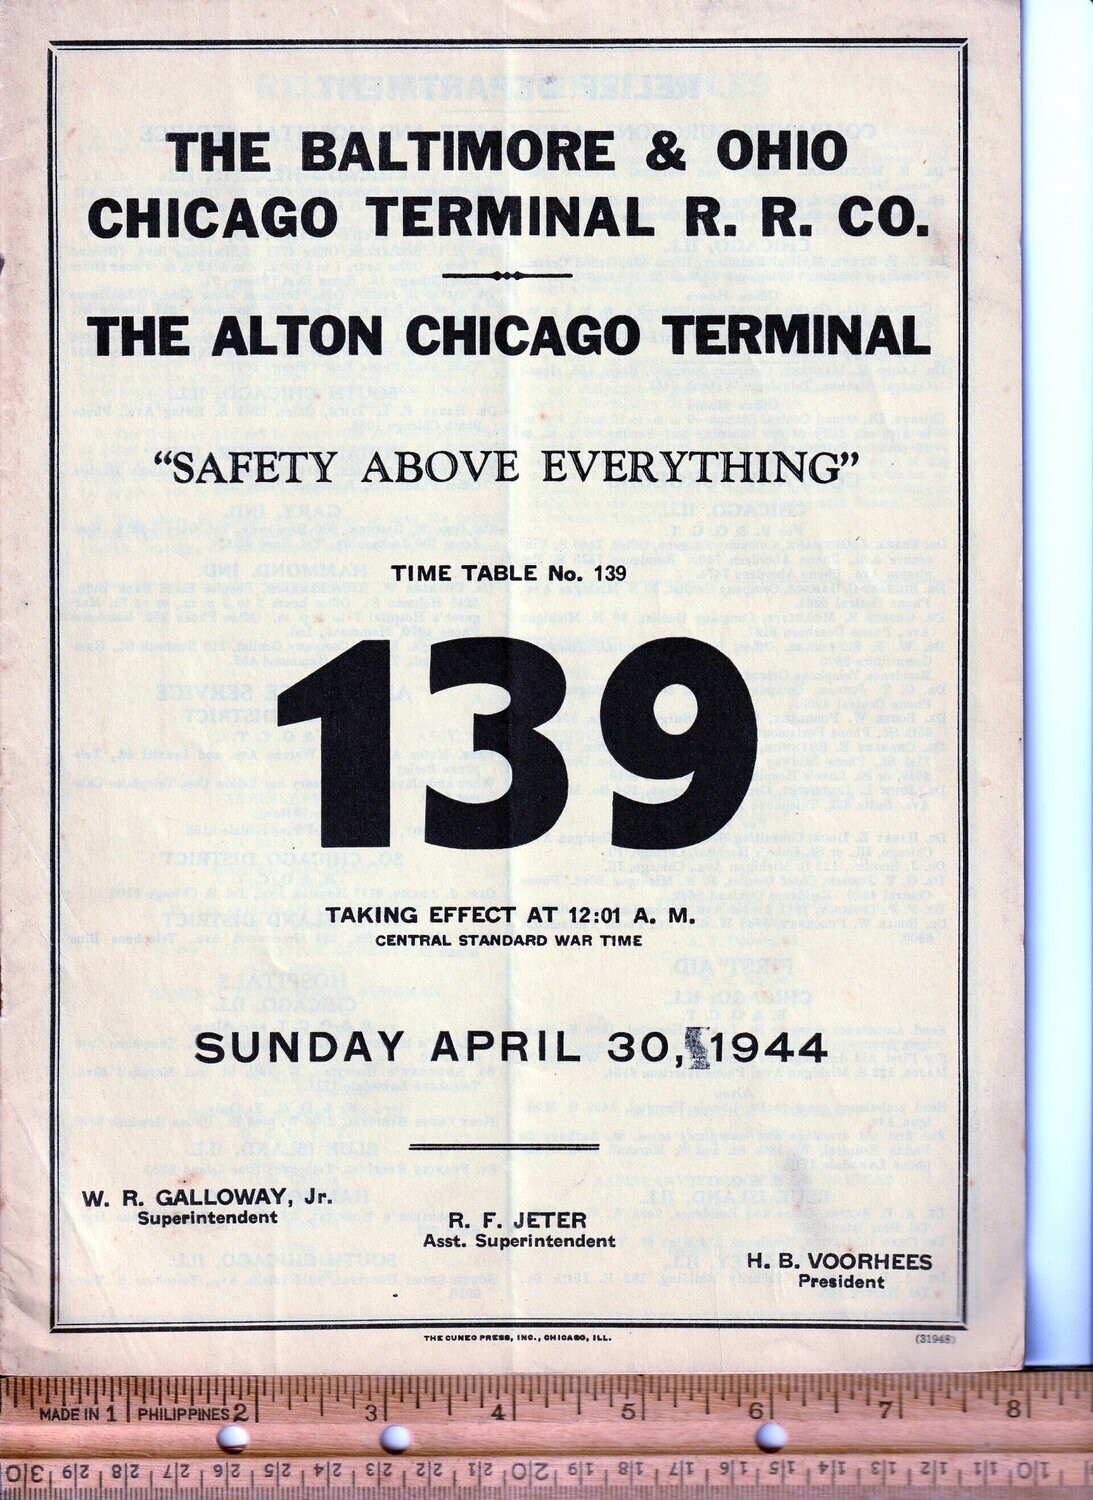 Baltimore & Ohio Chicago Terminal / Alton Chicago Terminal 1944